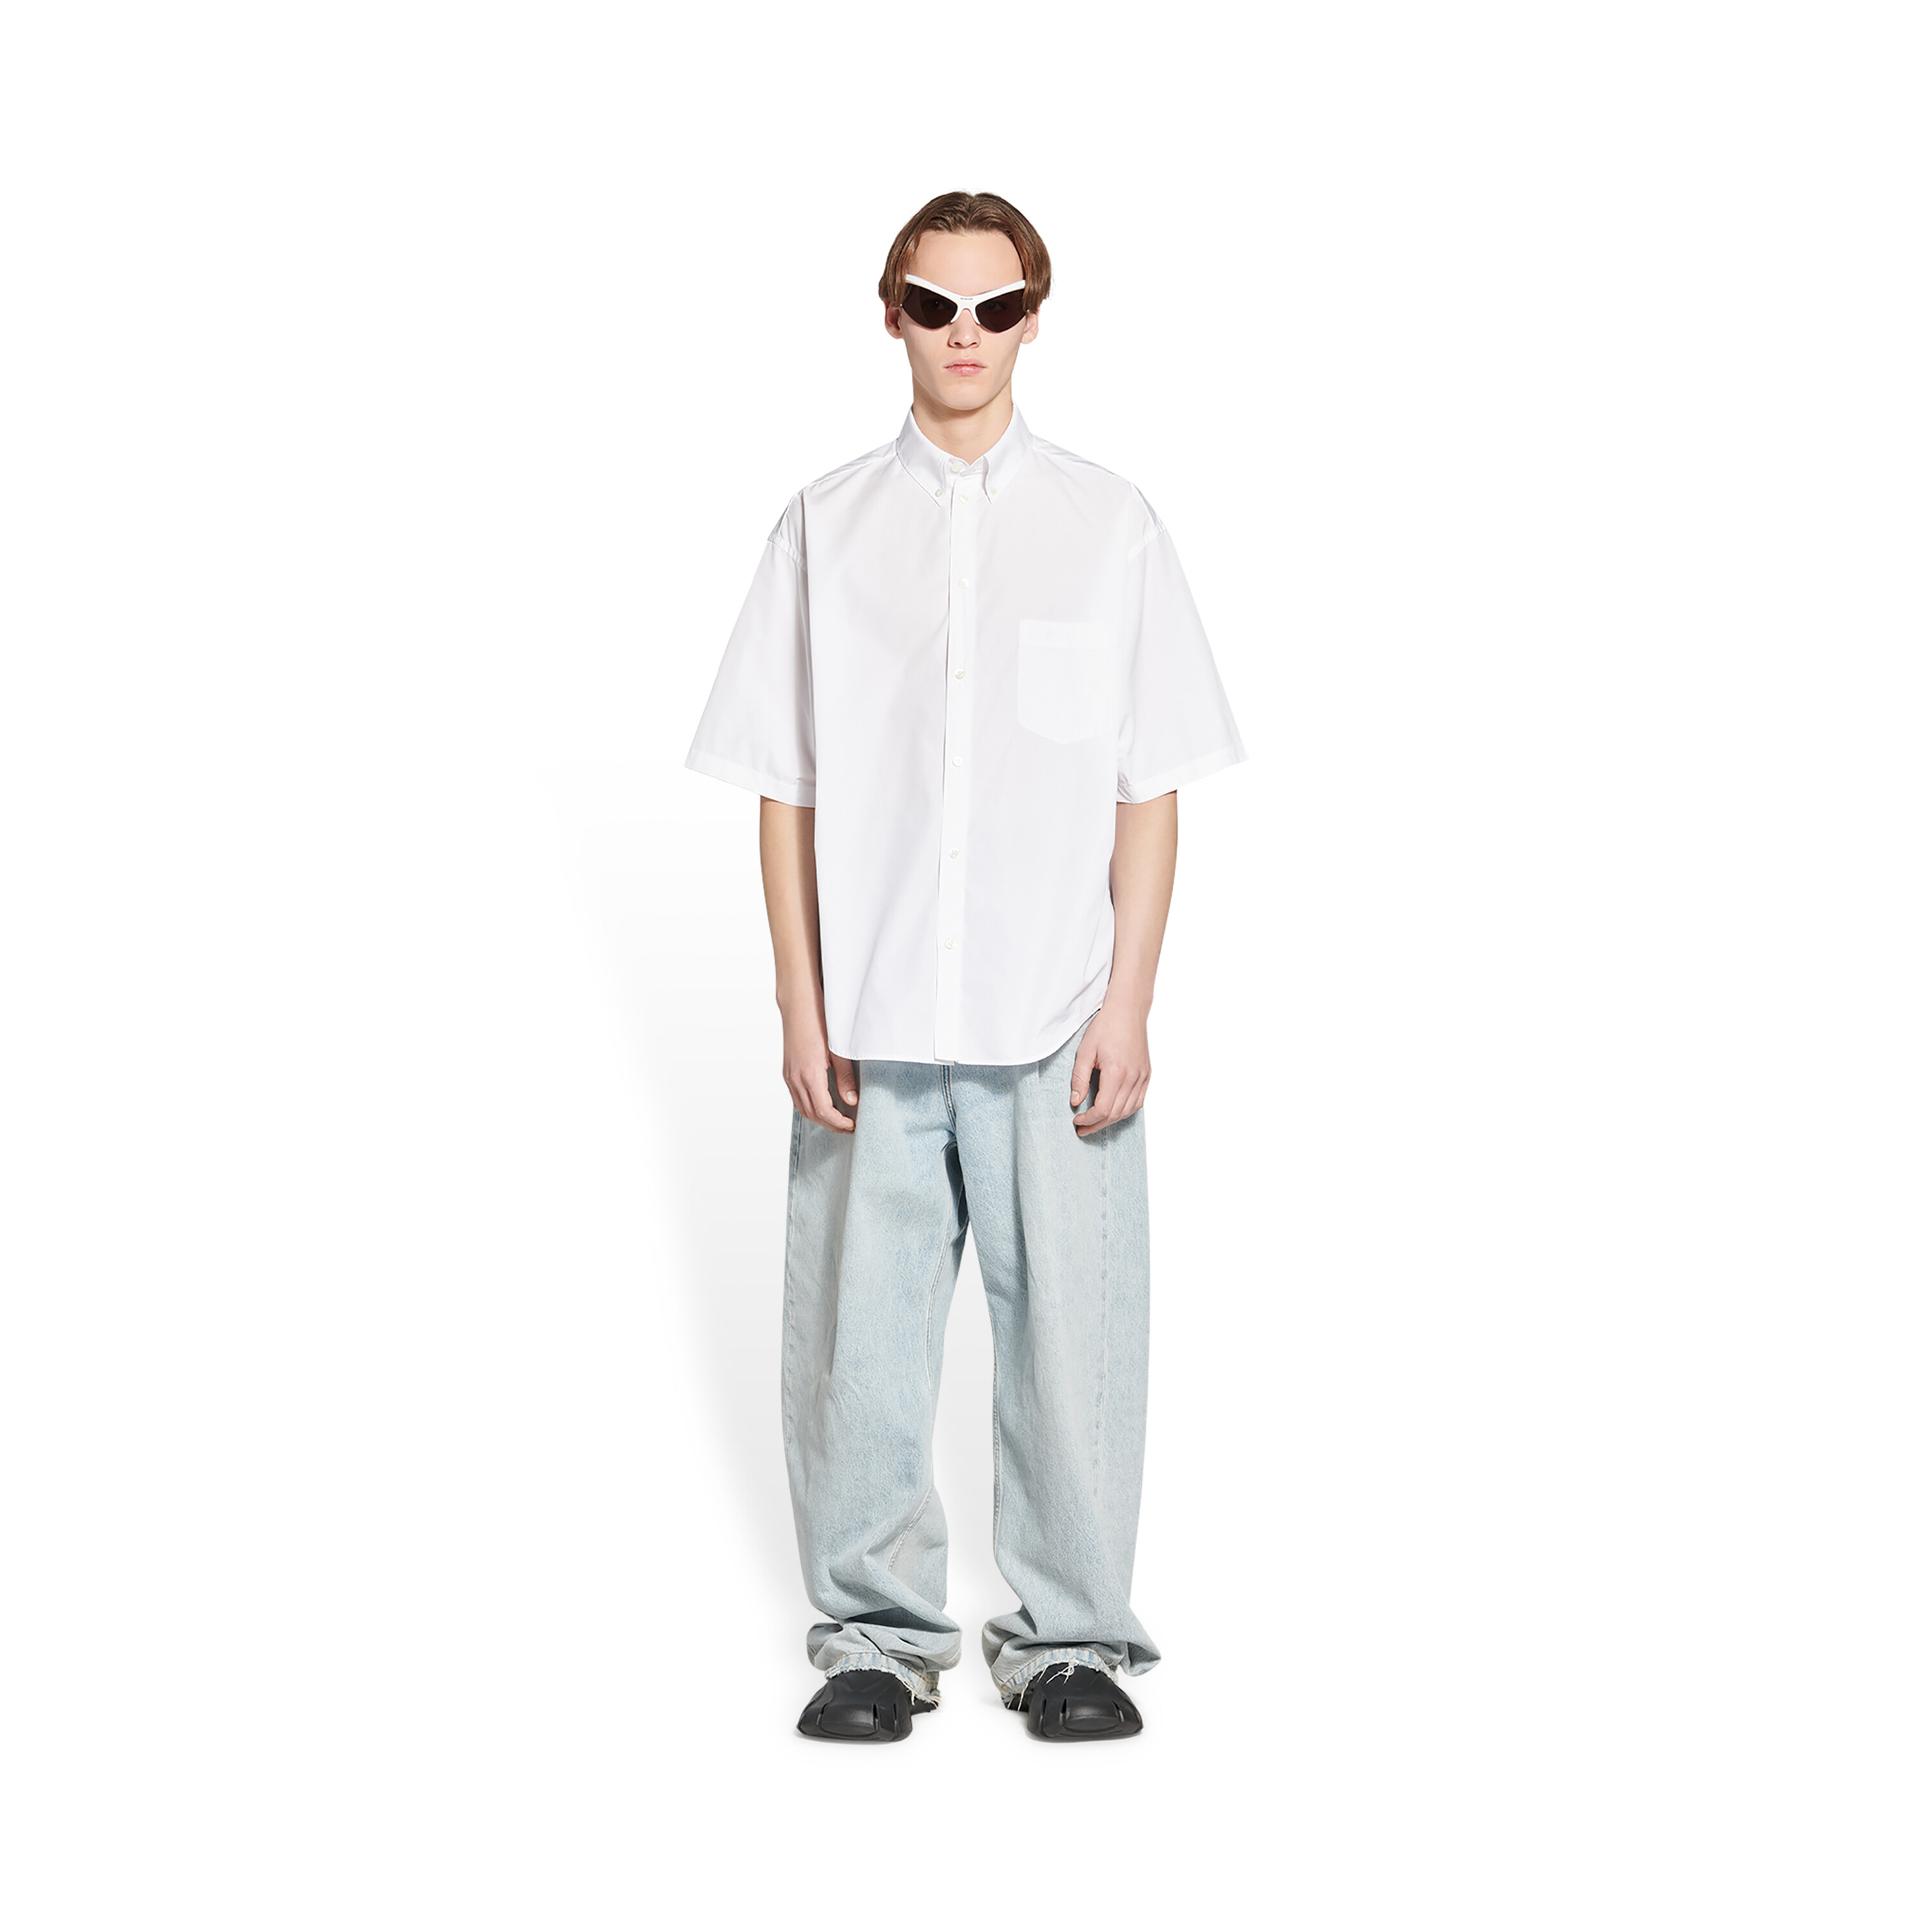 BALENCIAGA shirt in printed cotton  White  Balenciaga shirt 725390TNL89  online on GIGLIOCOM